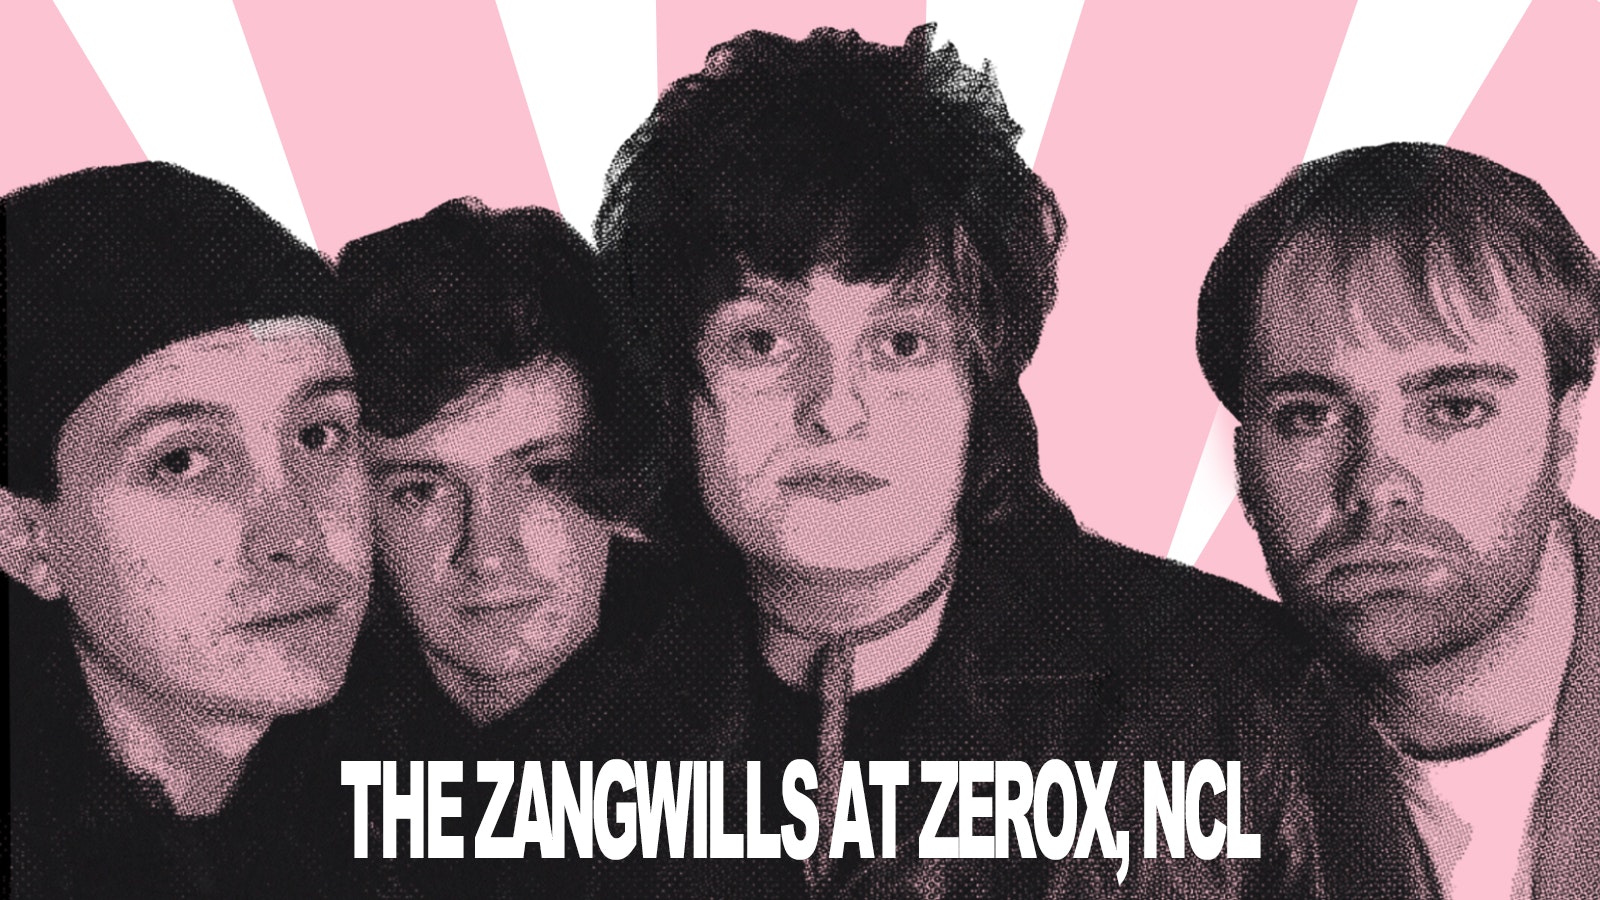 The Zangwills